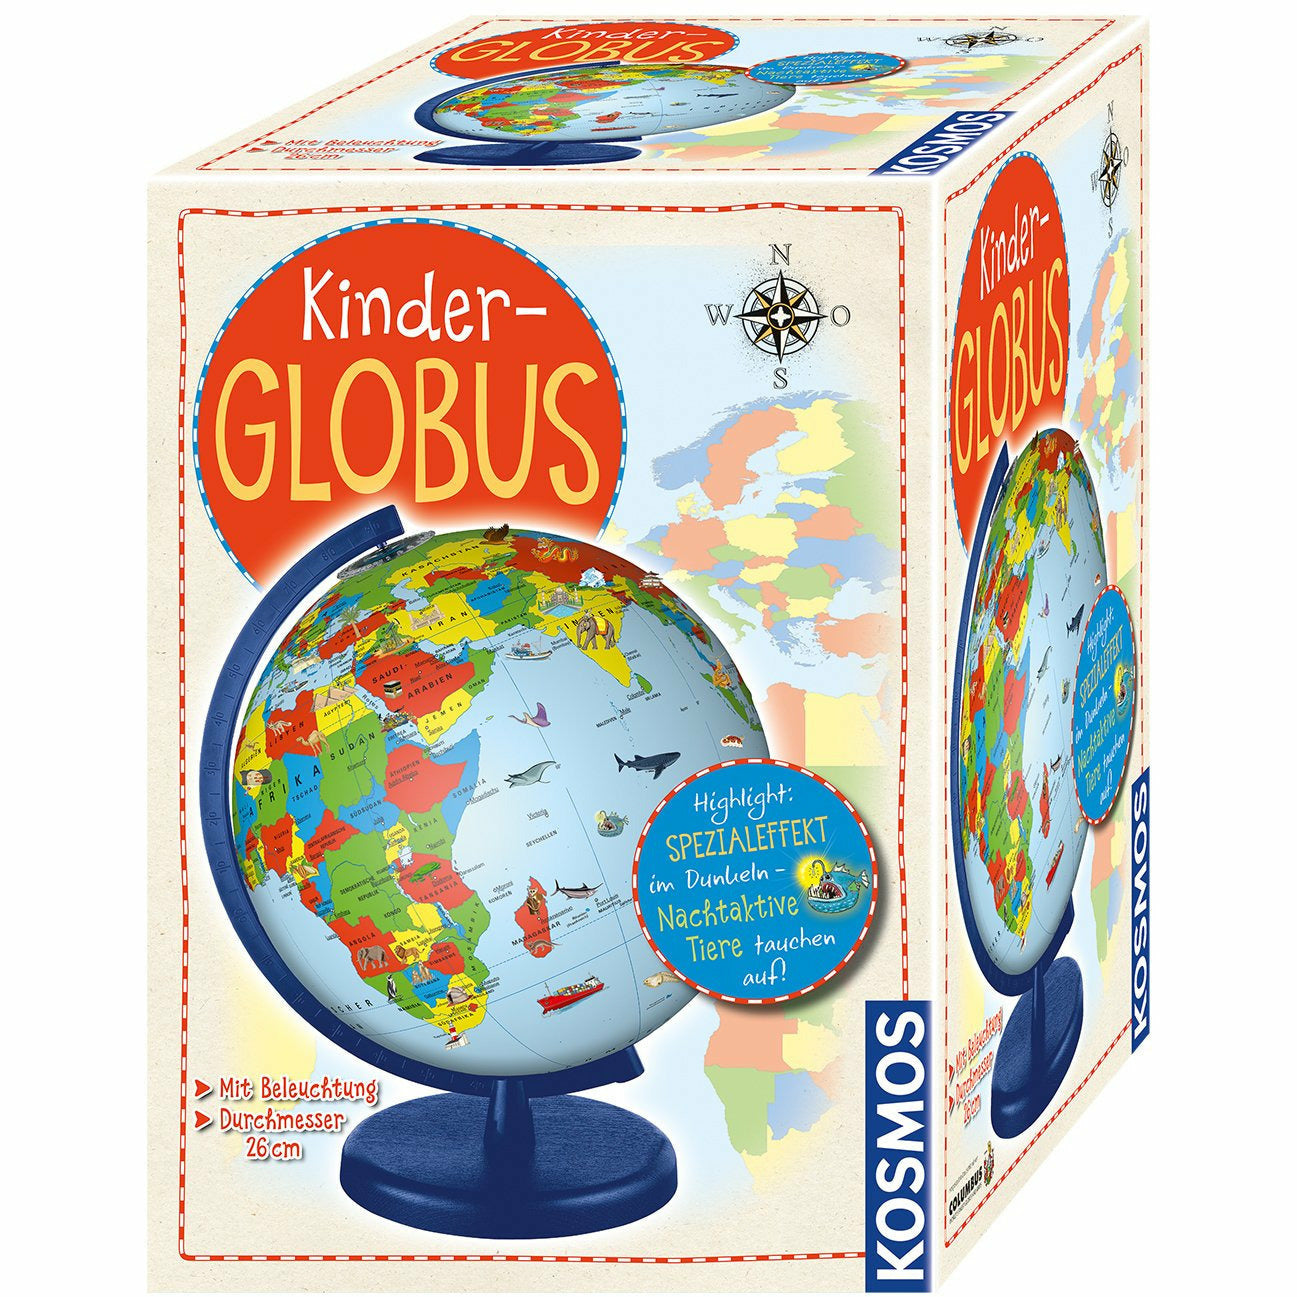 KOSMOS | Kinder-Globus